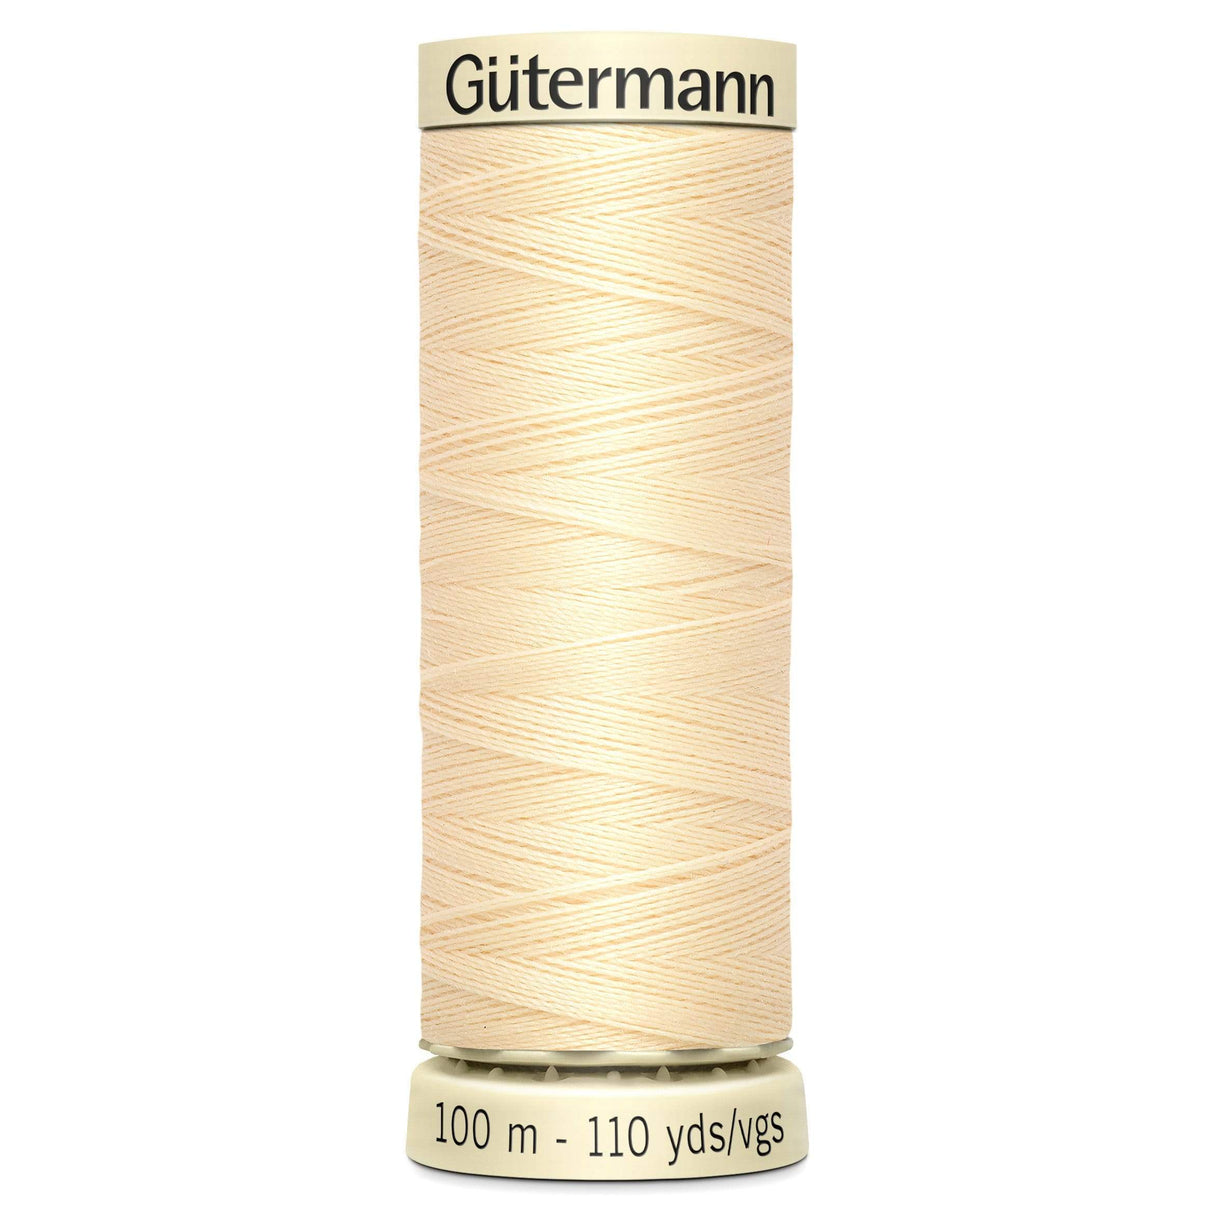 Groves Haberdashery 610 Gutermann Thread Sewing Cotton 100 m Black to Pink